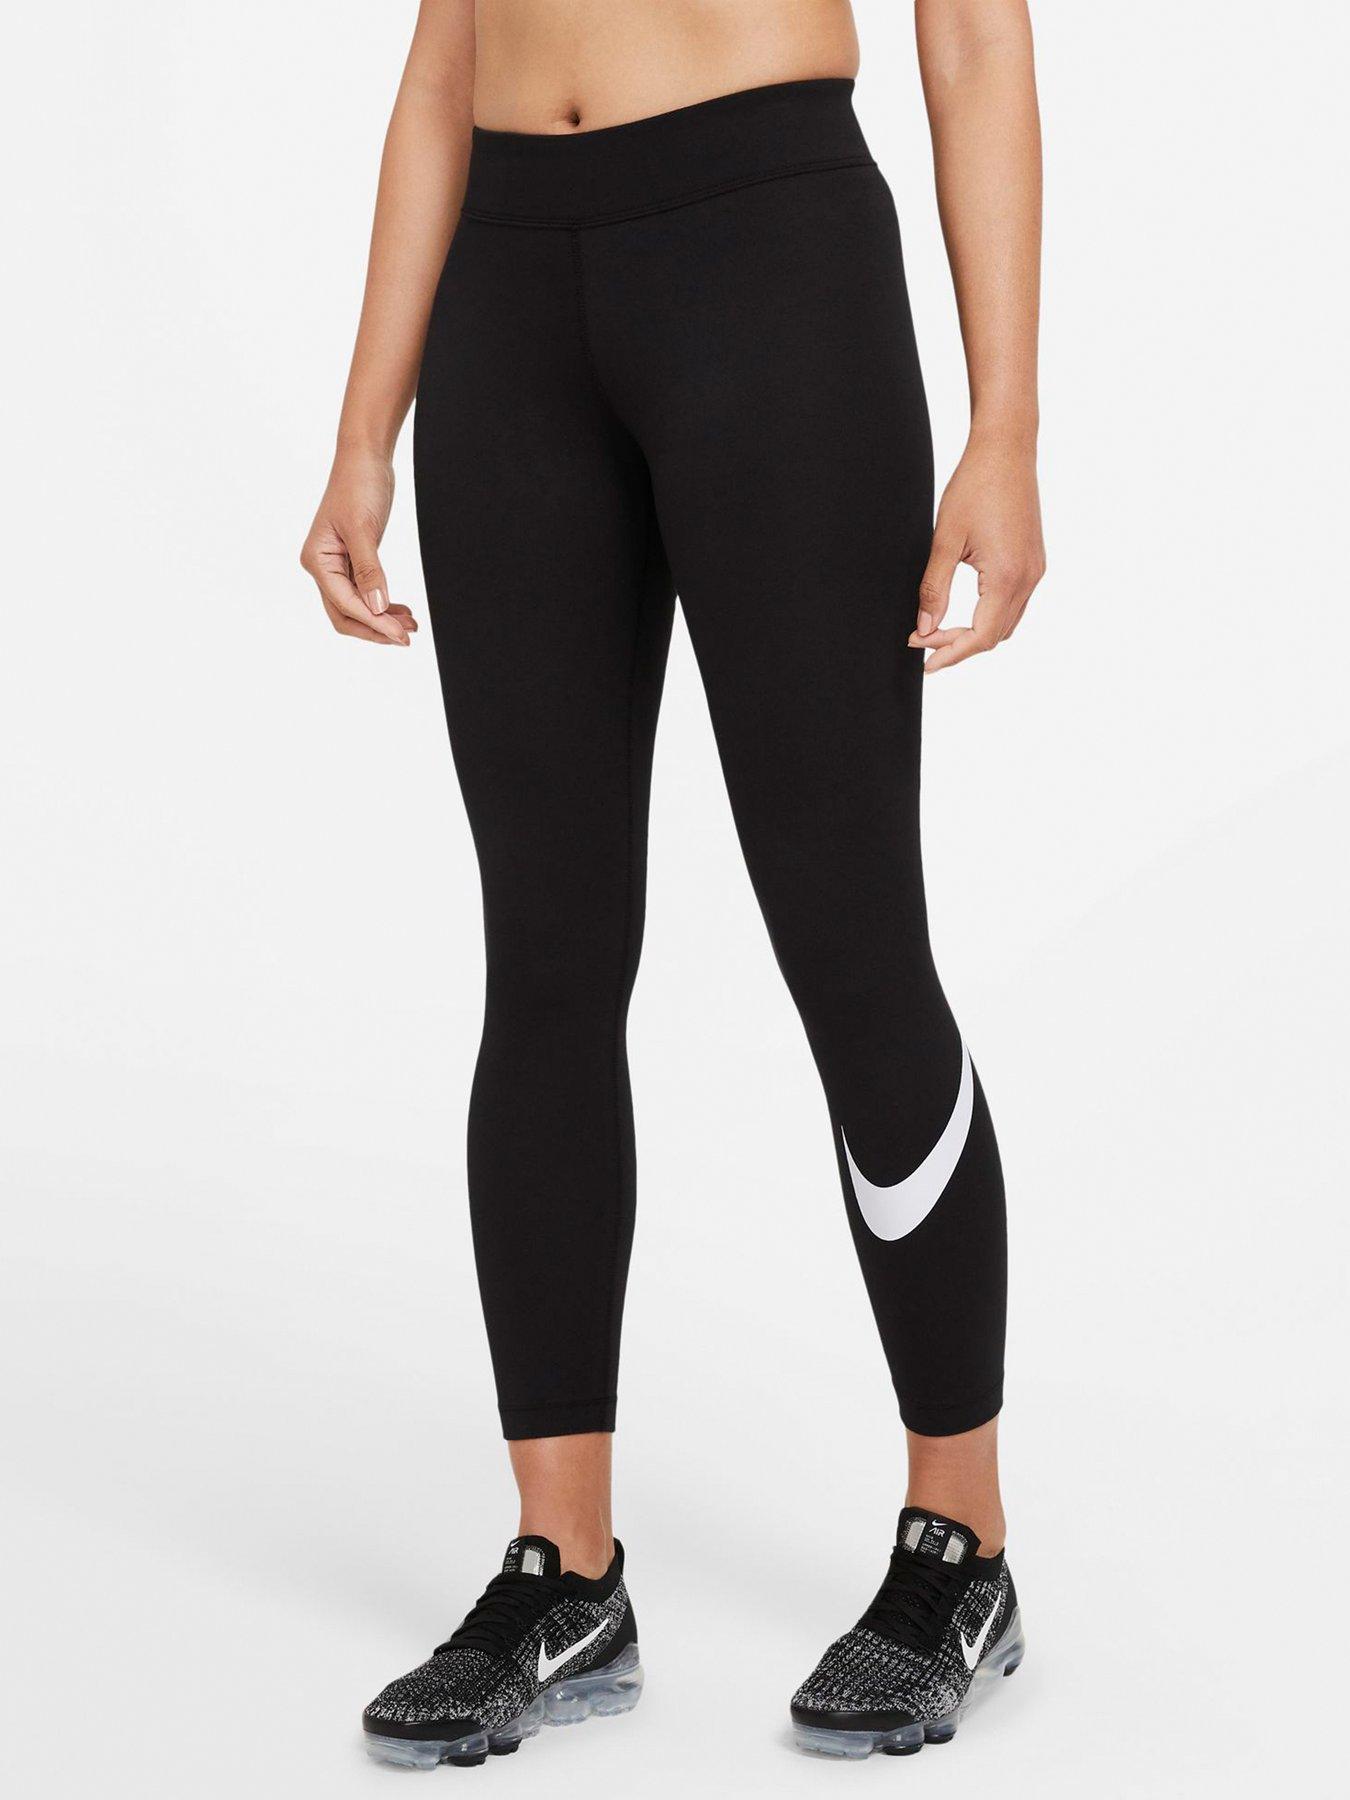 Nike leggings (XS), Women's Fashion, Activewear on Carousell